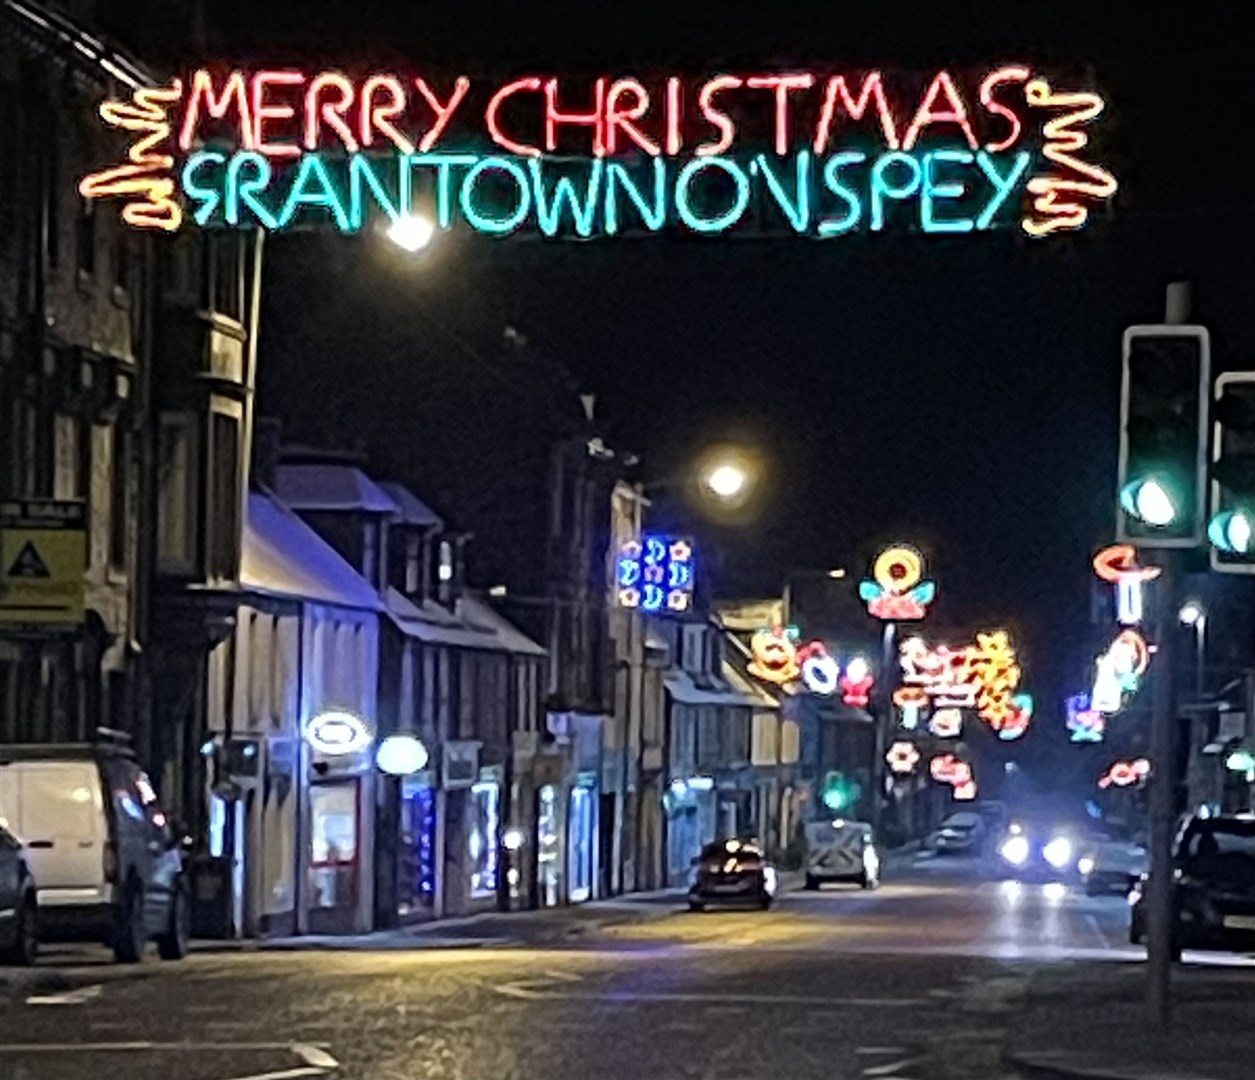 Plenty of festive cheer is on show in Grantown.